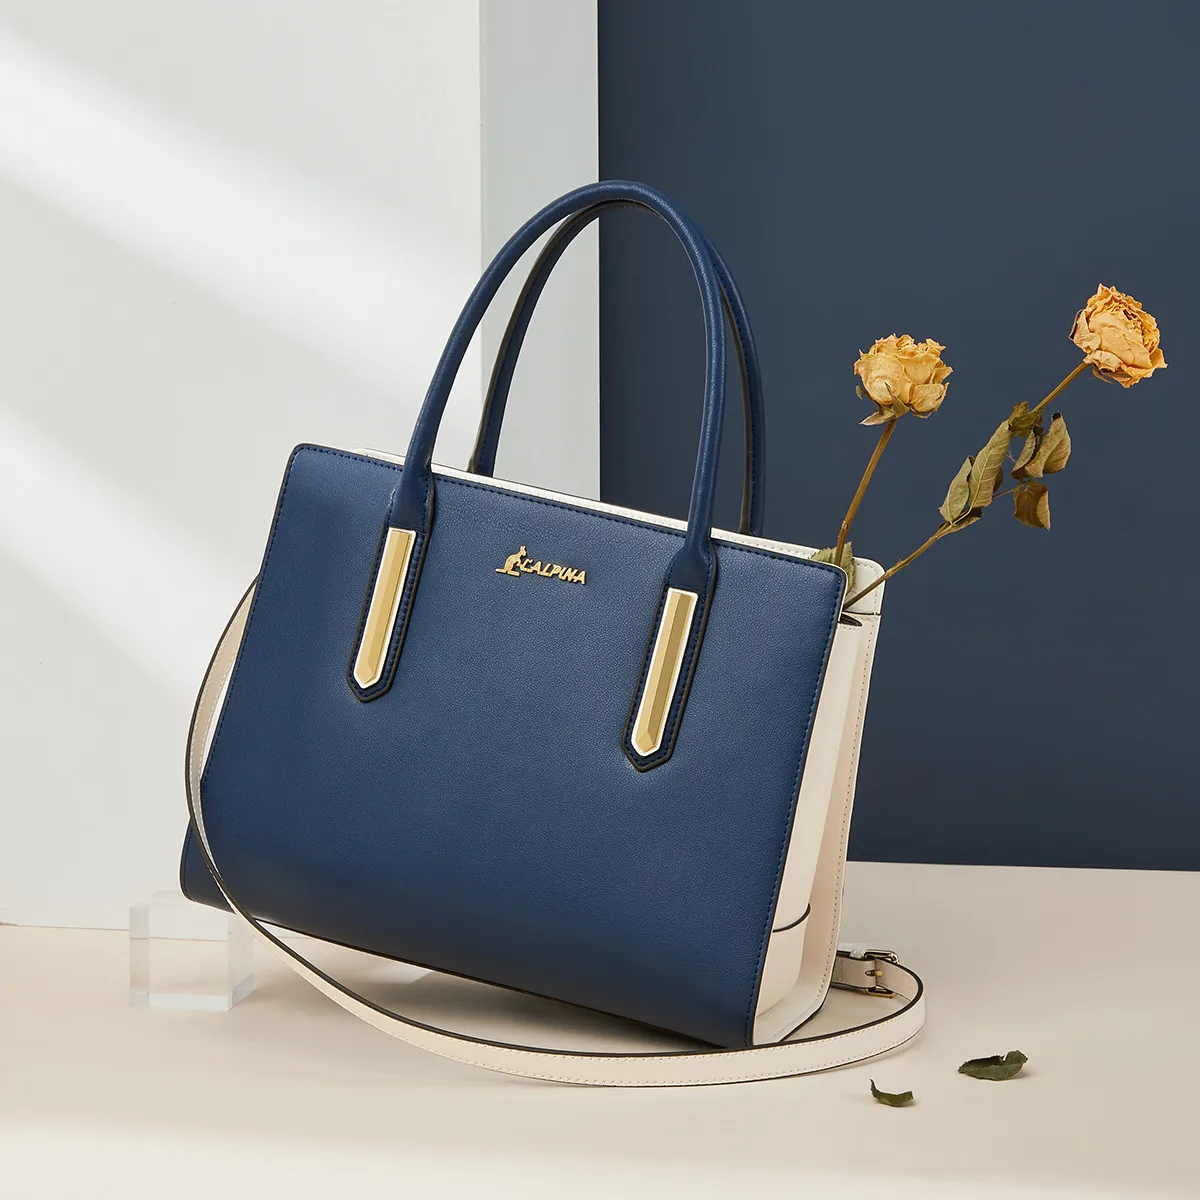 New Site Design Custom Bags Launches Custom Handbags and